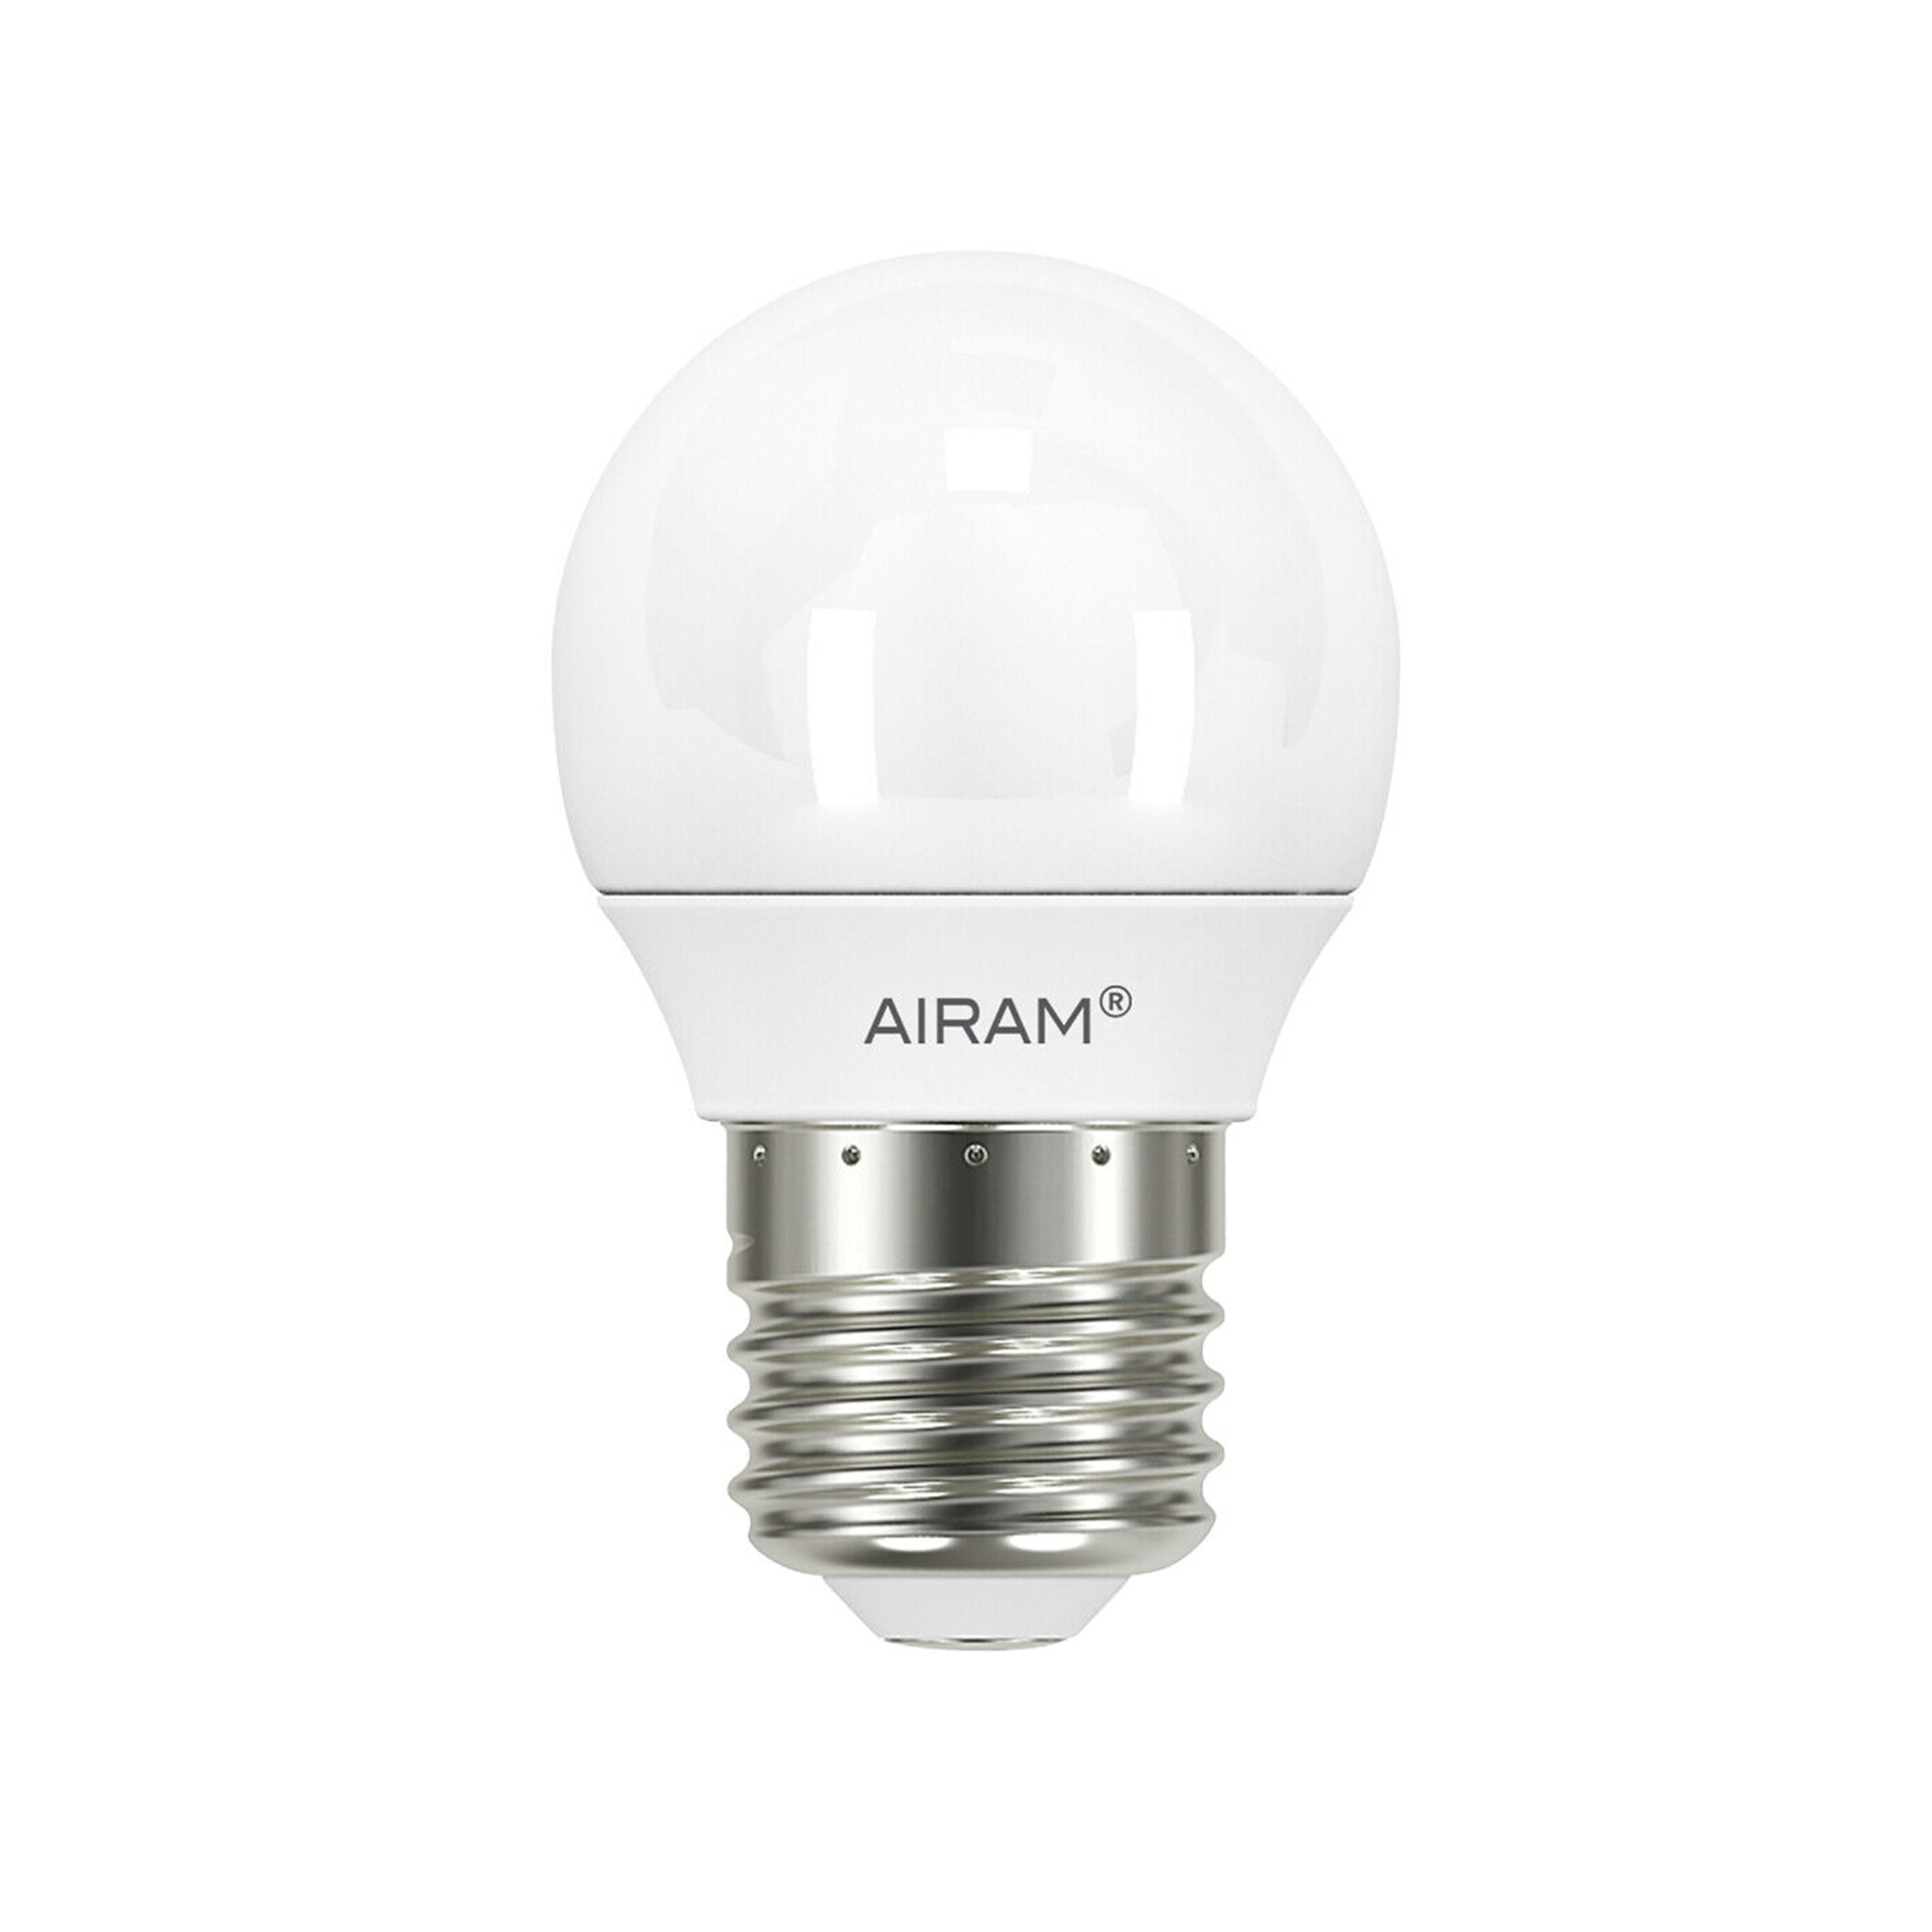 LED-lampa Airam E27 Small, 2700K, 3.5 W / 250 lm